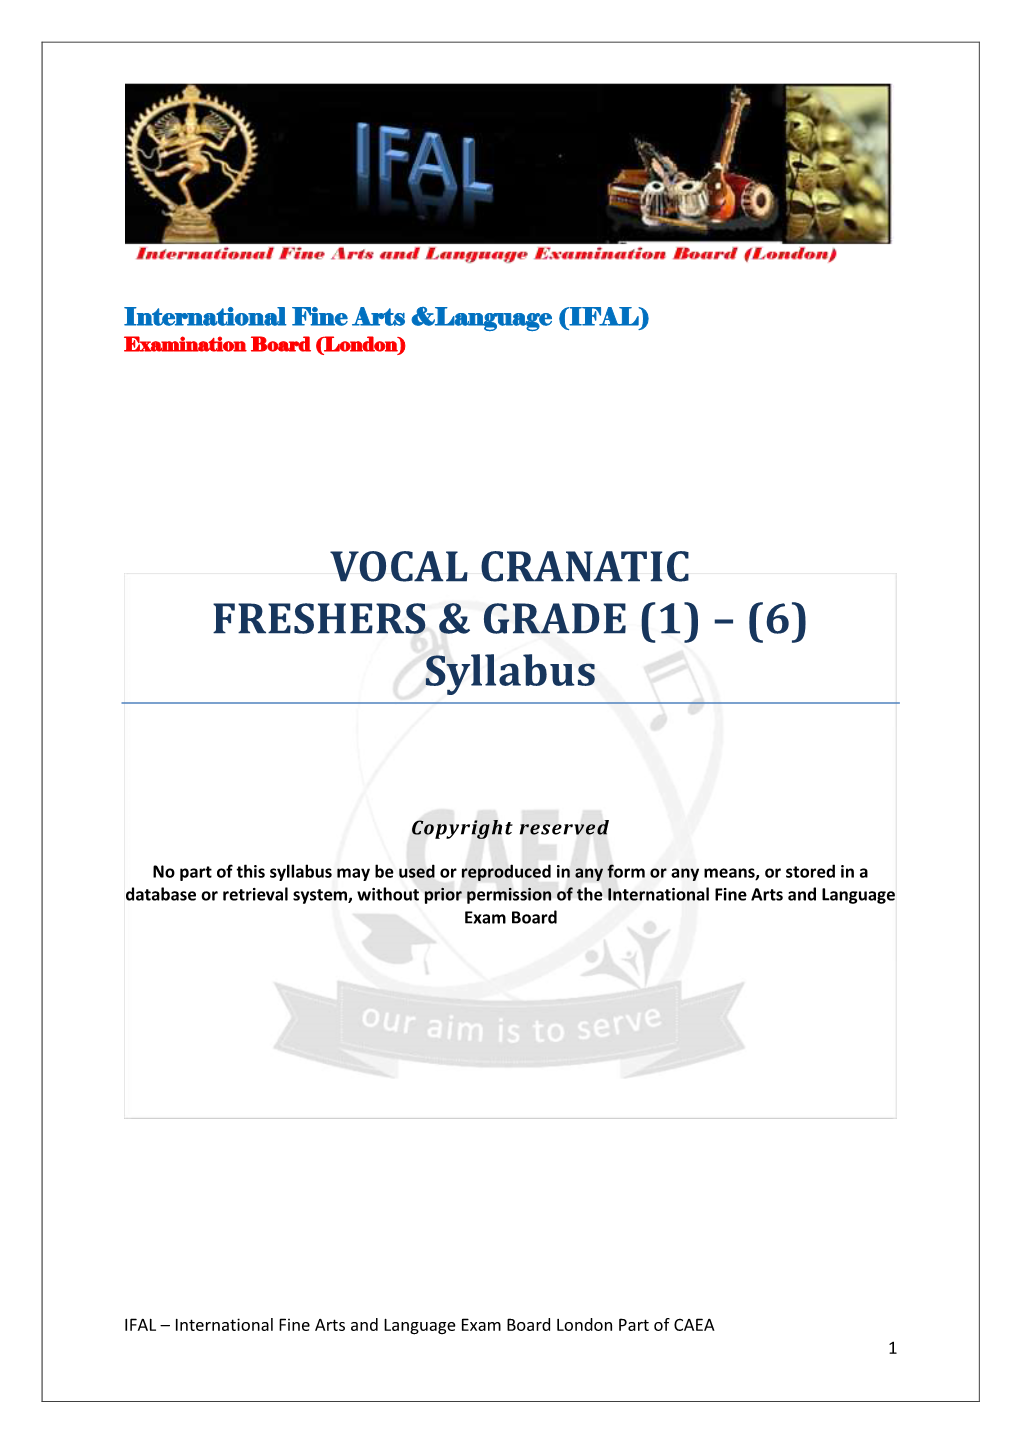 VOCAL CRANATIC FRESHERS & GRADE (1) – (6) Syllabus